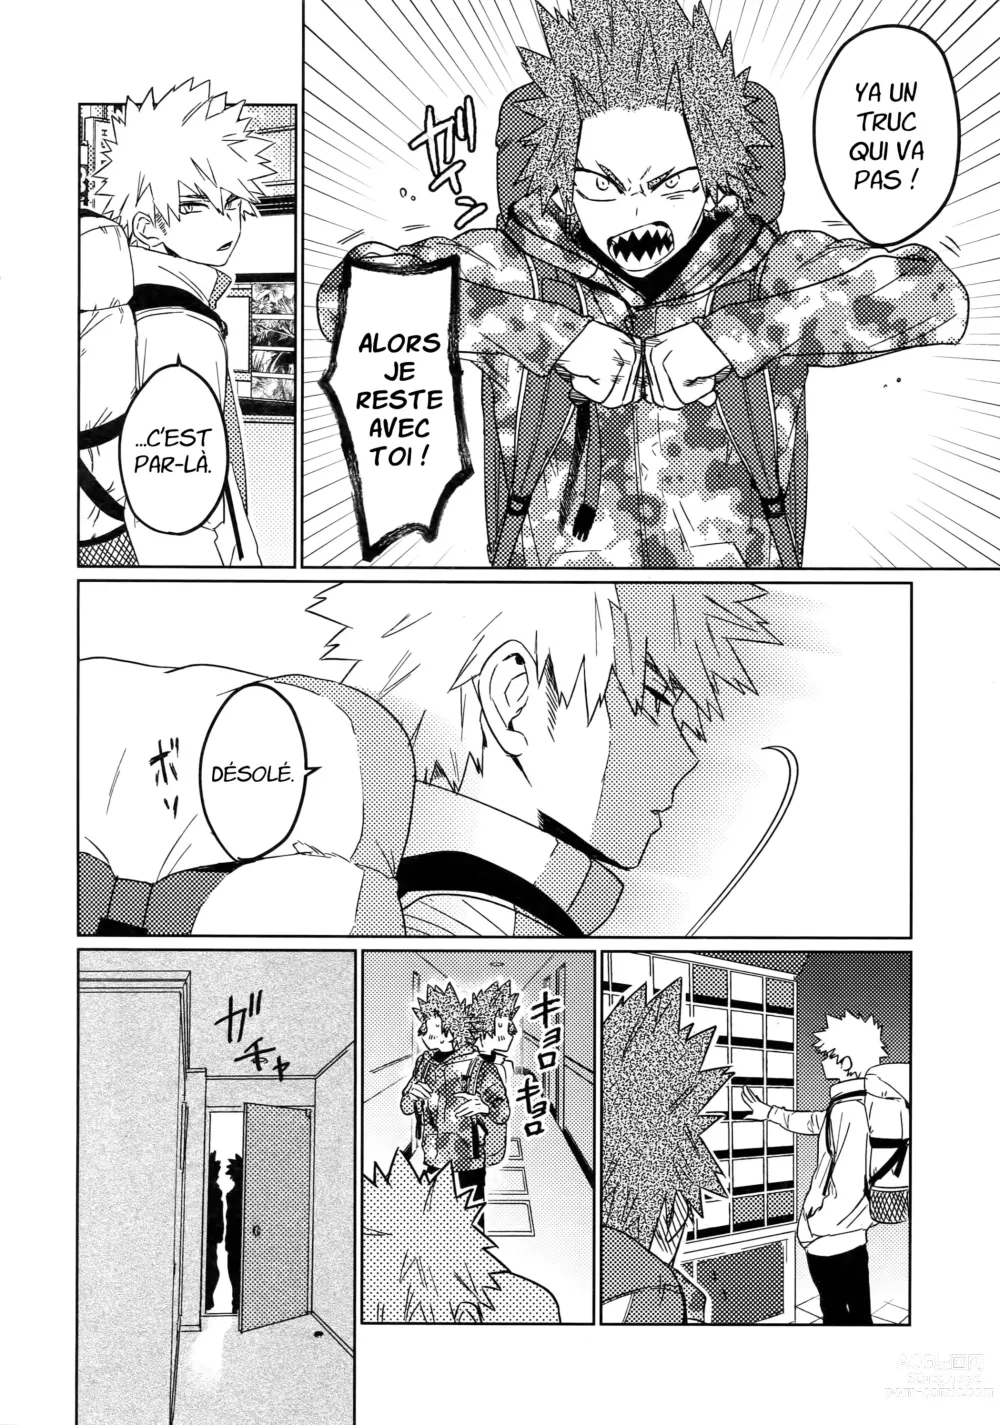 Page 5 of doujinshi Tasukero ya Red Riot